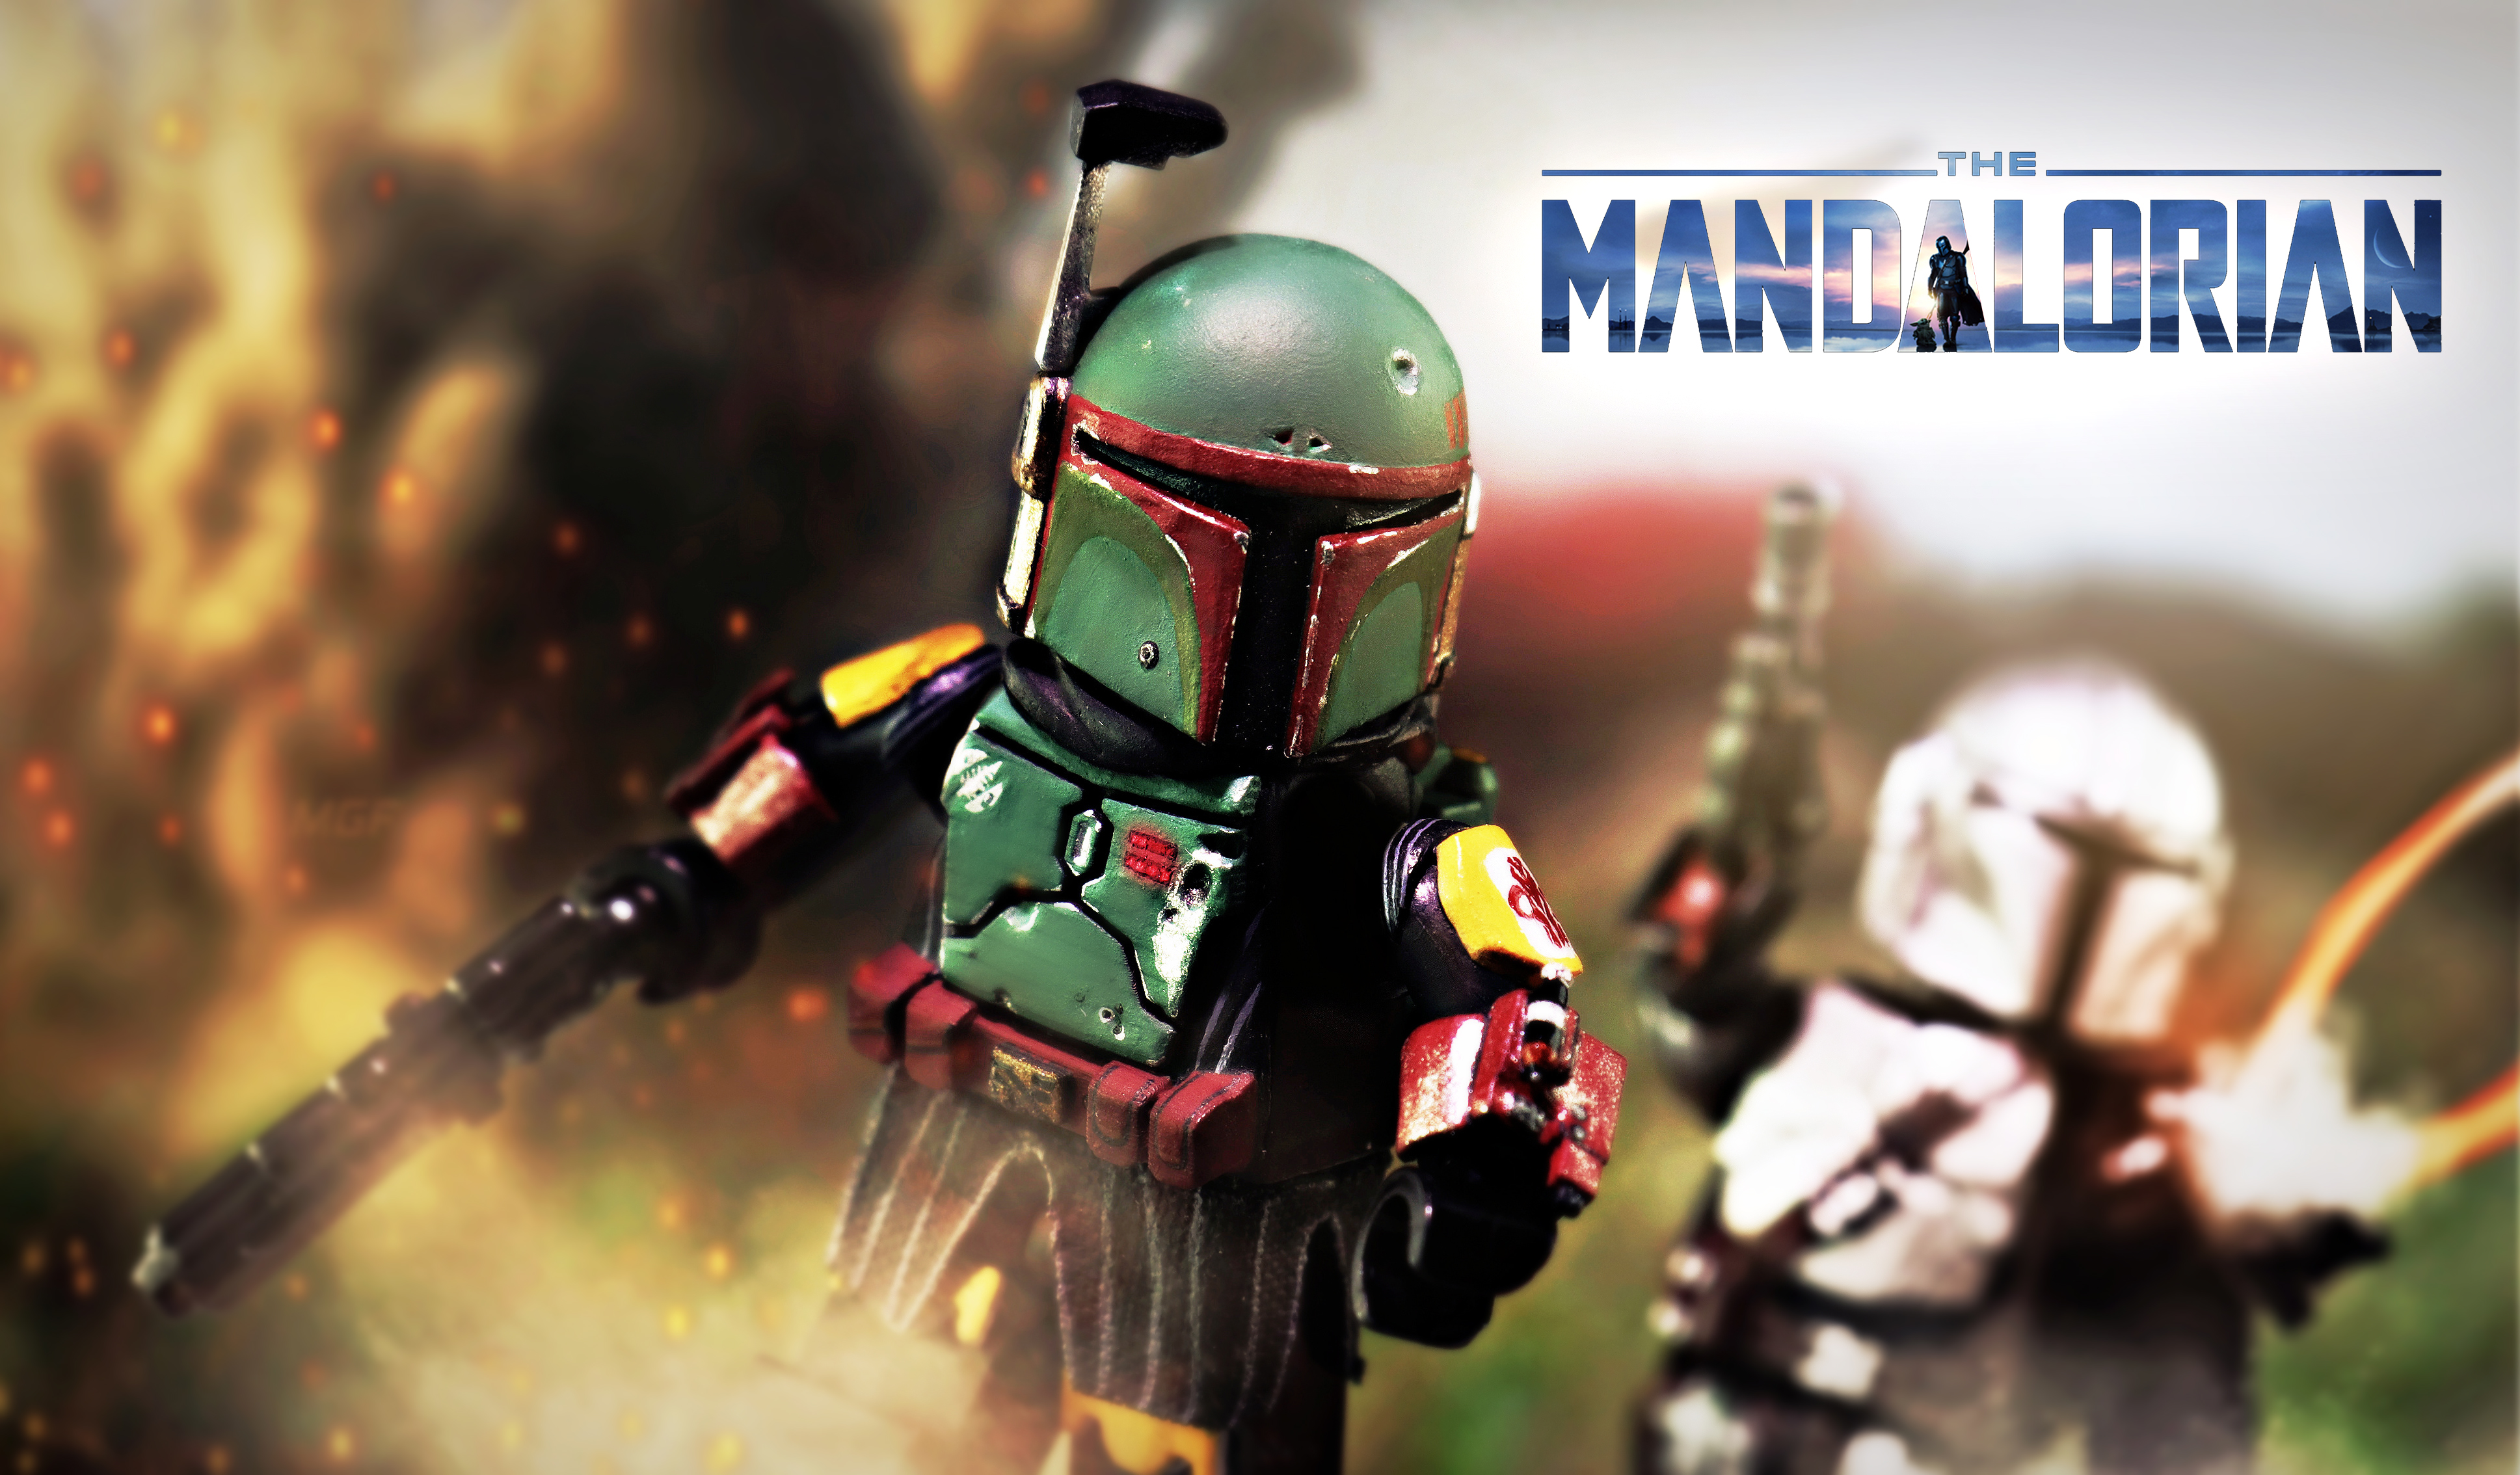 LEGO The Mandalorian 4k Ultra HD Wallpaper Background Image 3874x2268